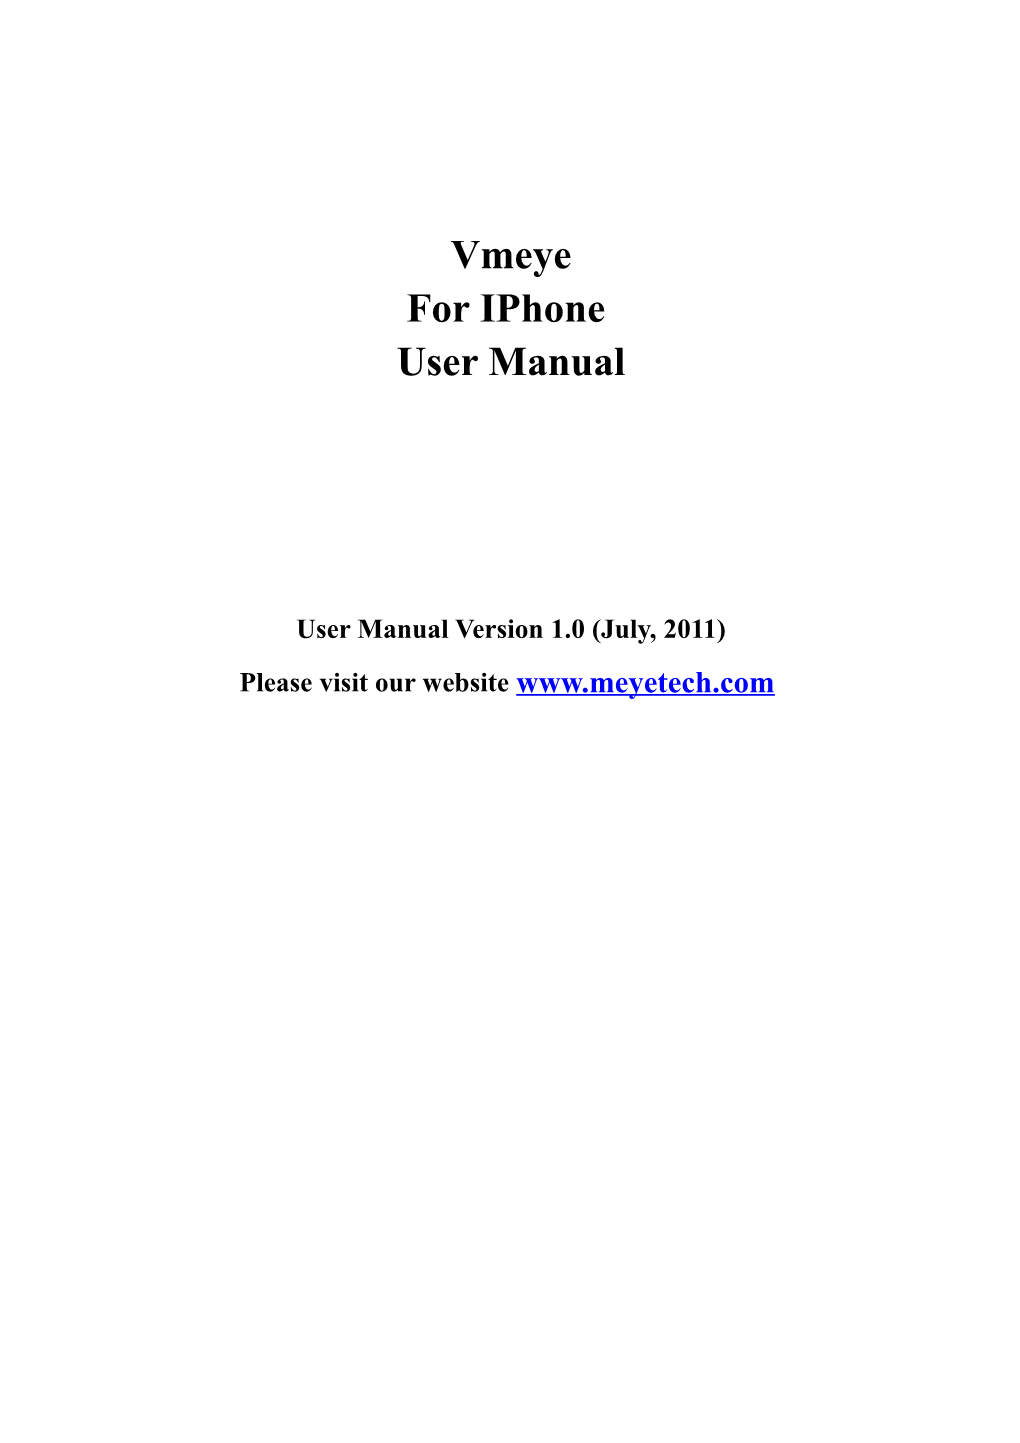 User Manual Version 1.0 (July, 2011)